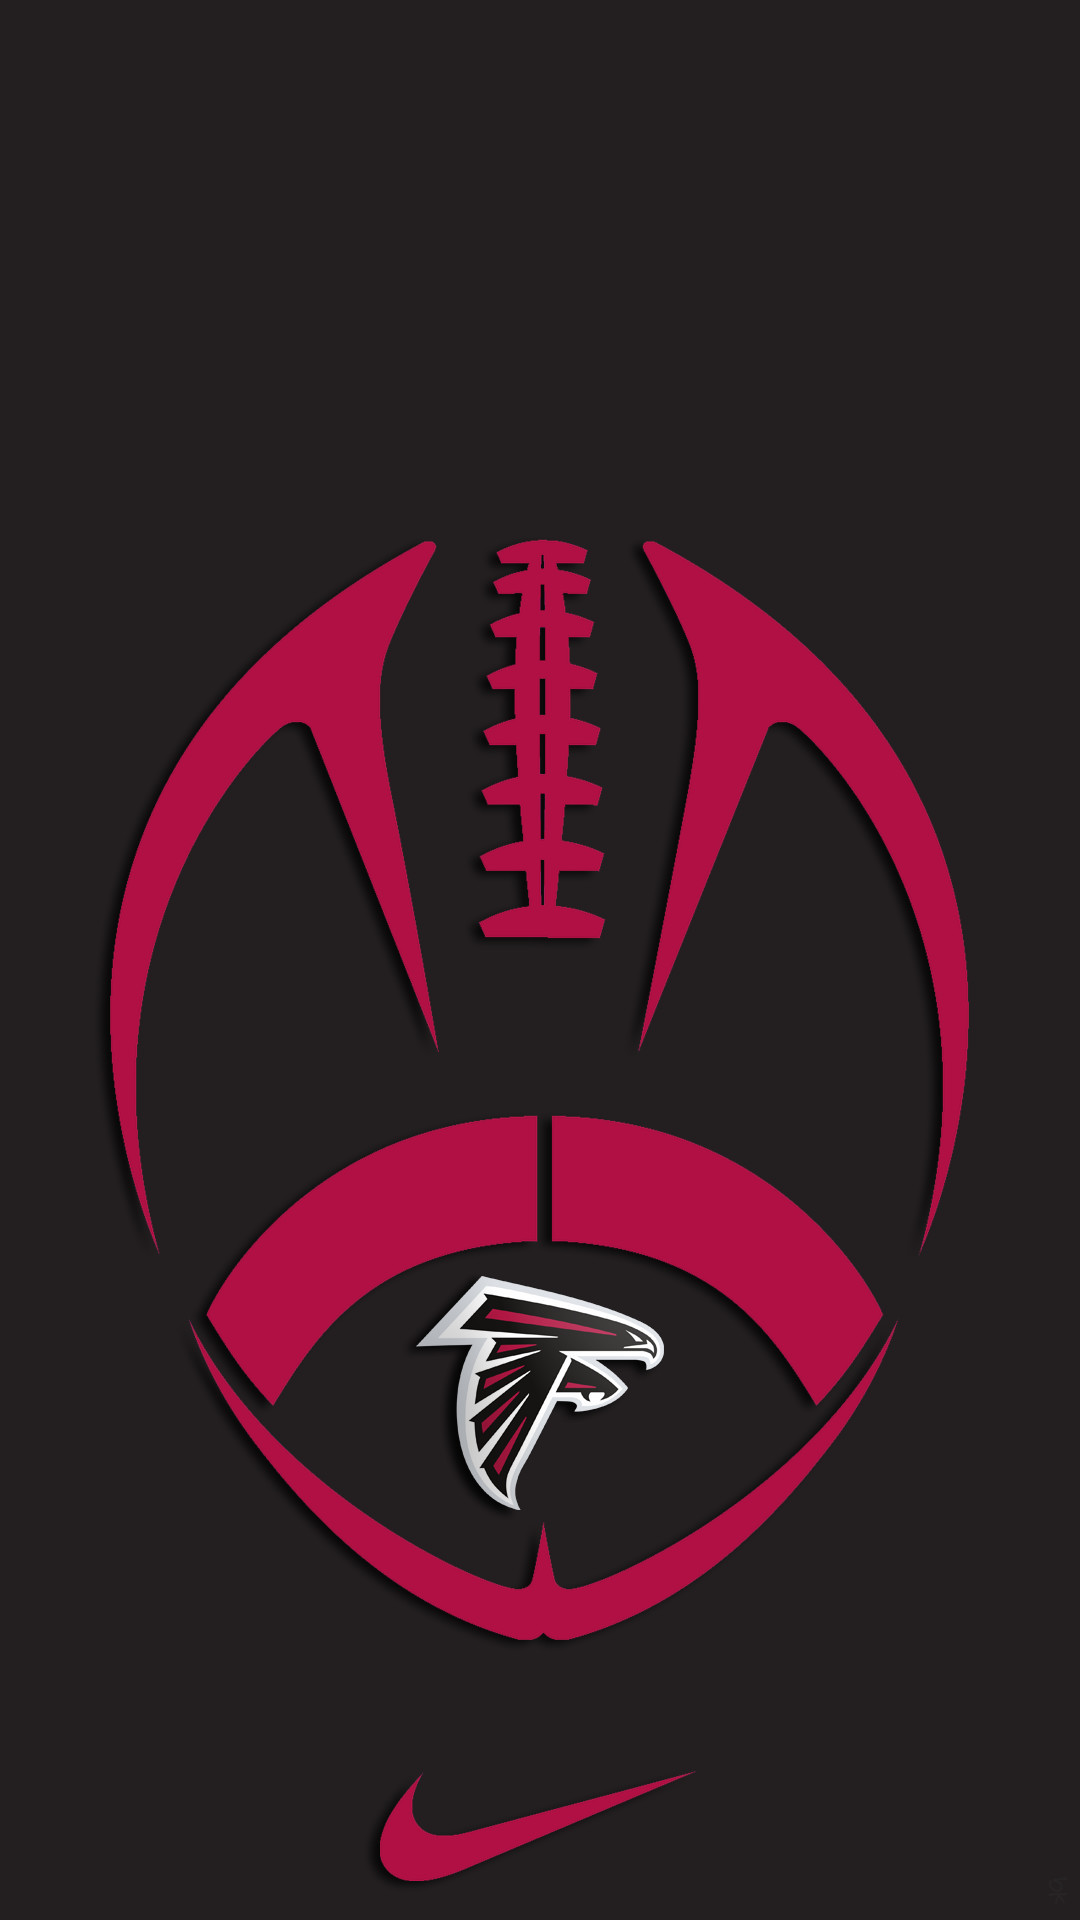 Atlanta Falcons Wallpaper